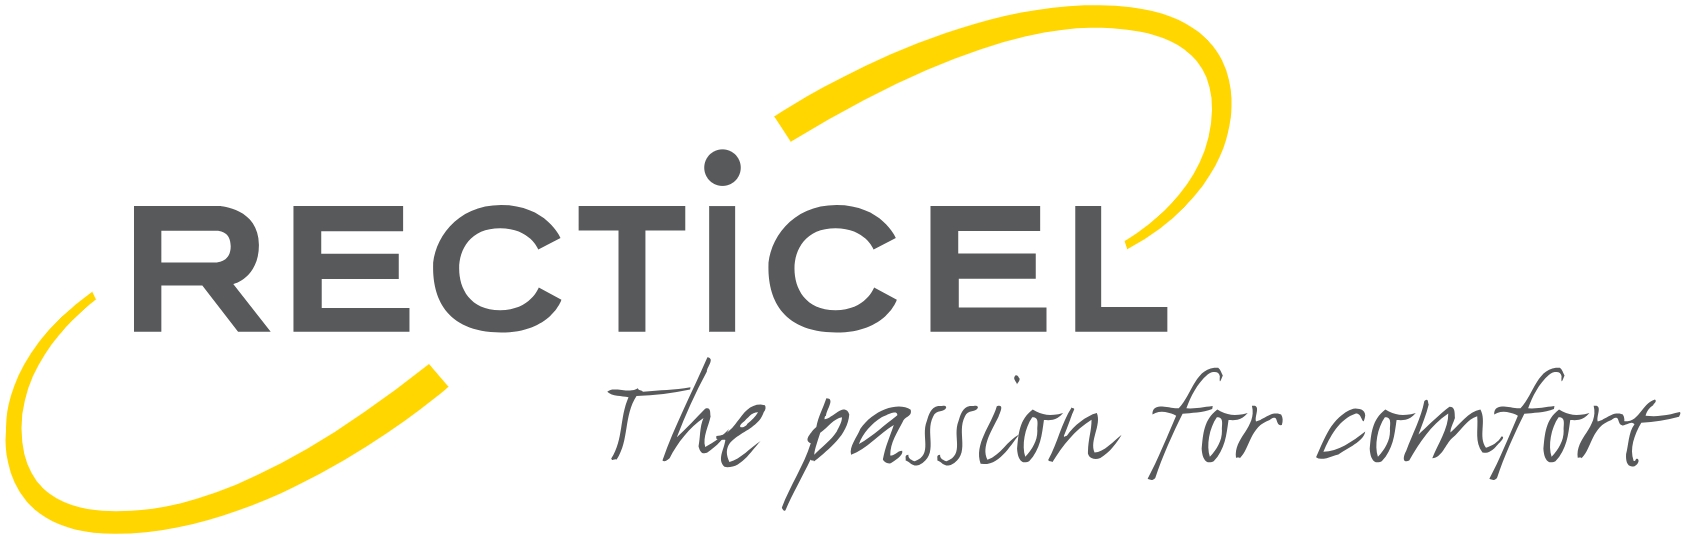 Recticel_logo.jpg